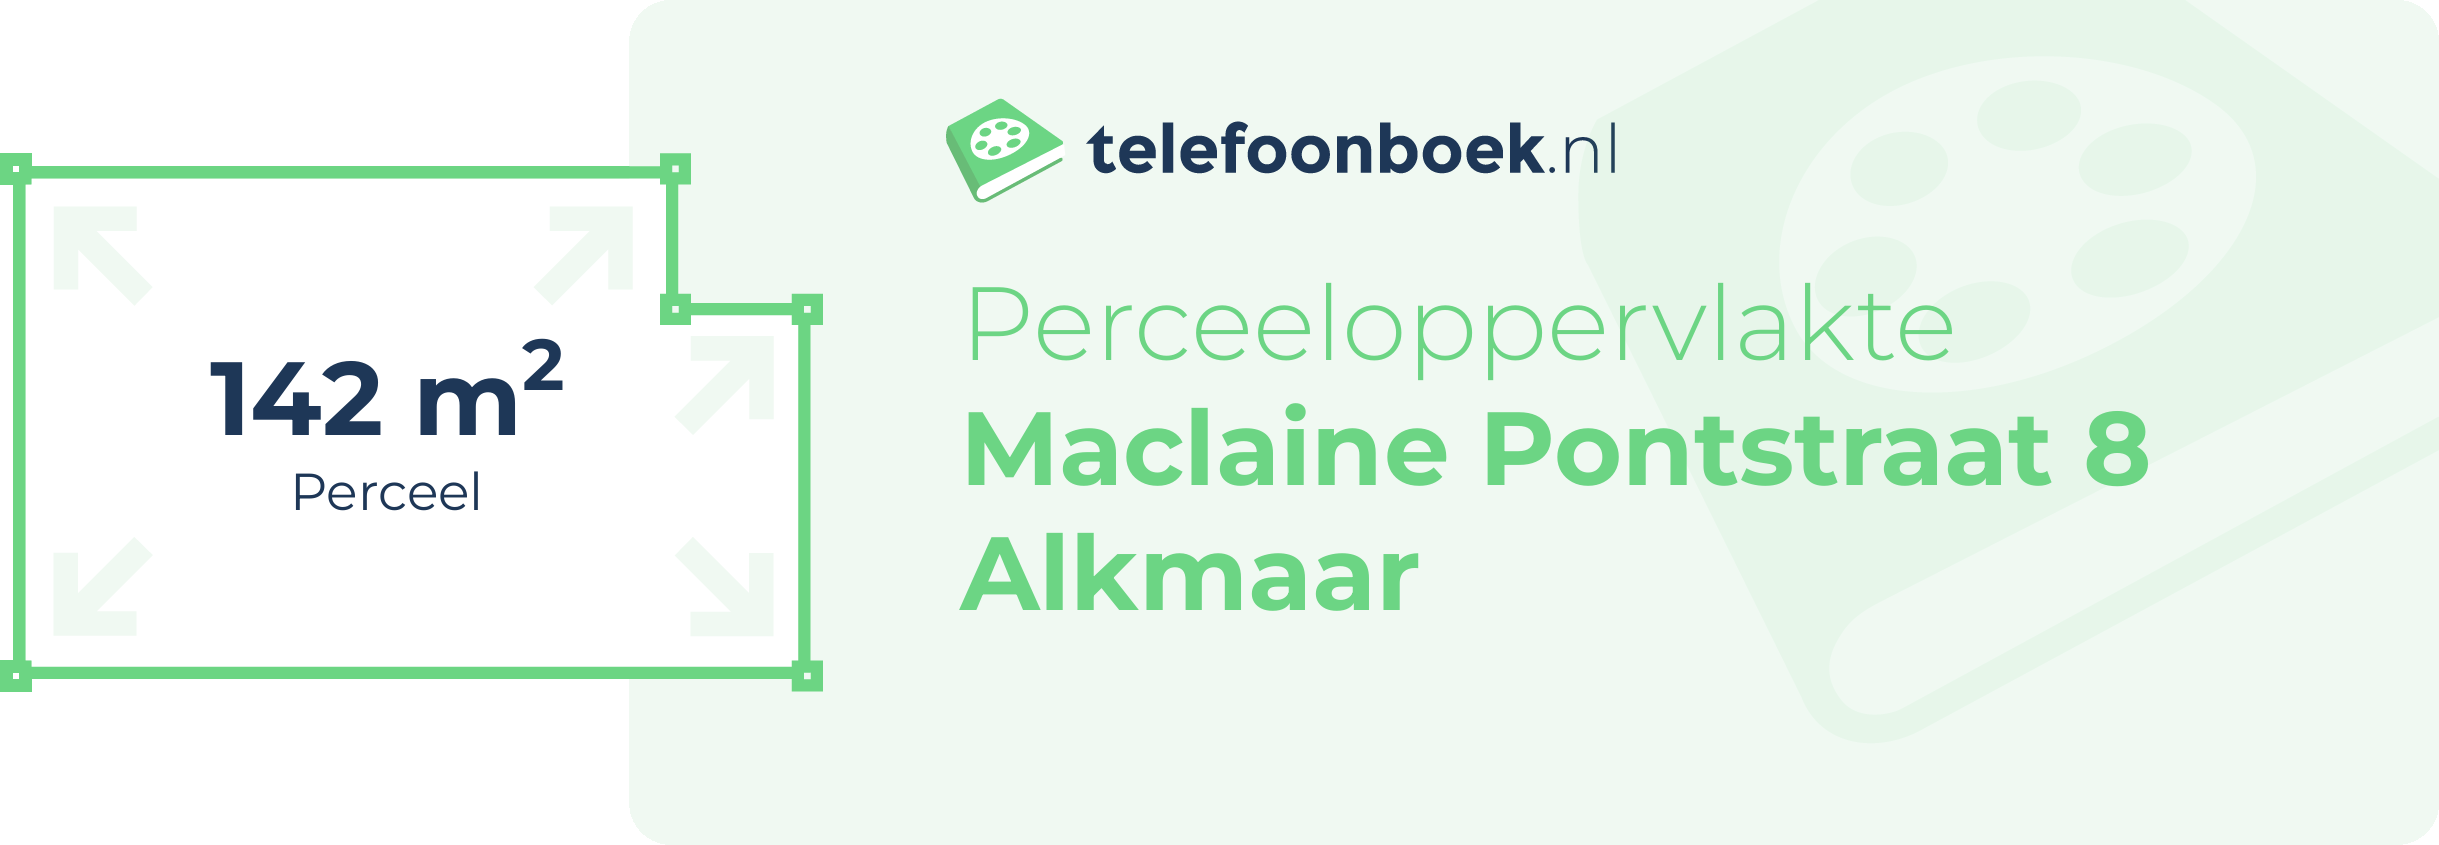 Perceeloppervlakte Maclaine Pontstraat 8 Alkmaar